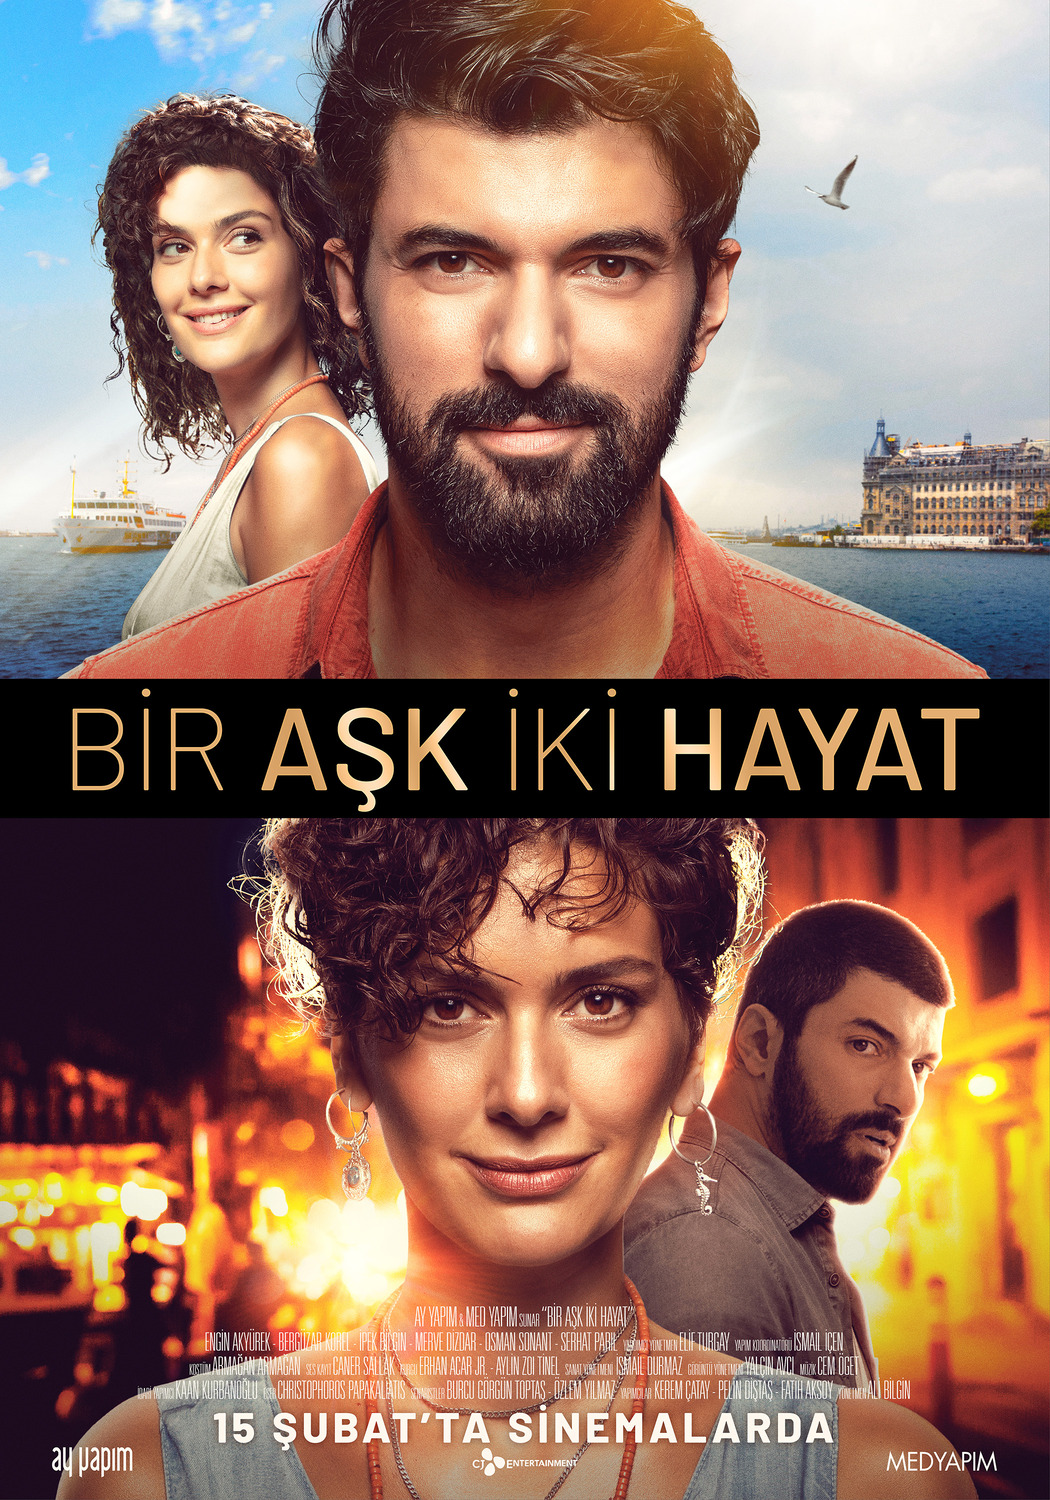 Extra Large Movie Poster Image for Bir Ask Iki Hayat (#1 of 3)